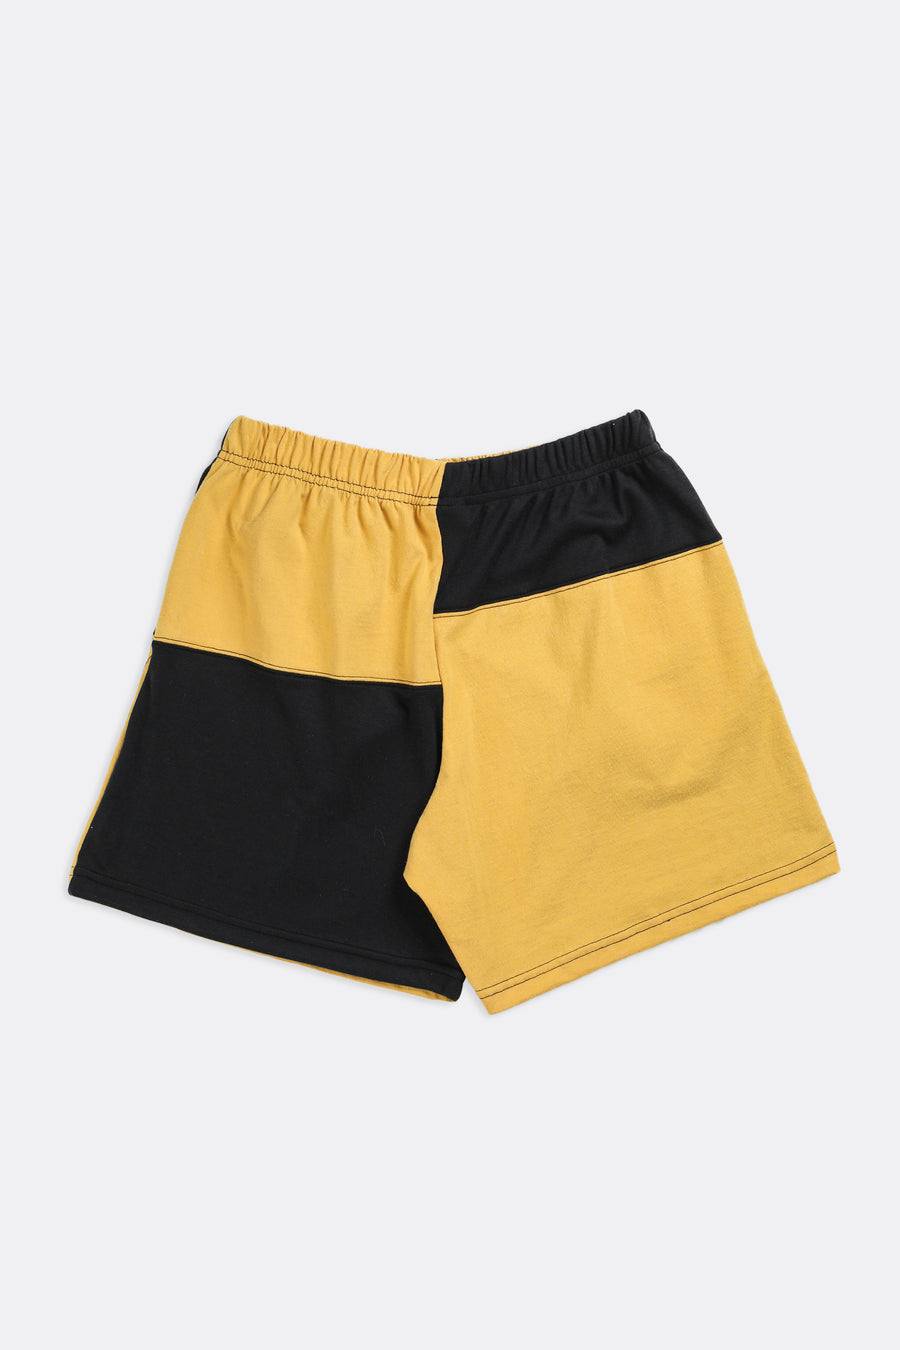 Unisex Rework Carhartt Patchwork Tee Shorts - XS, S, M, L